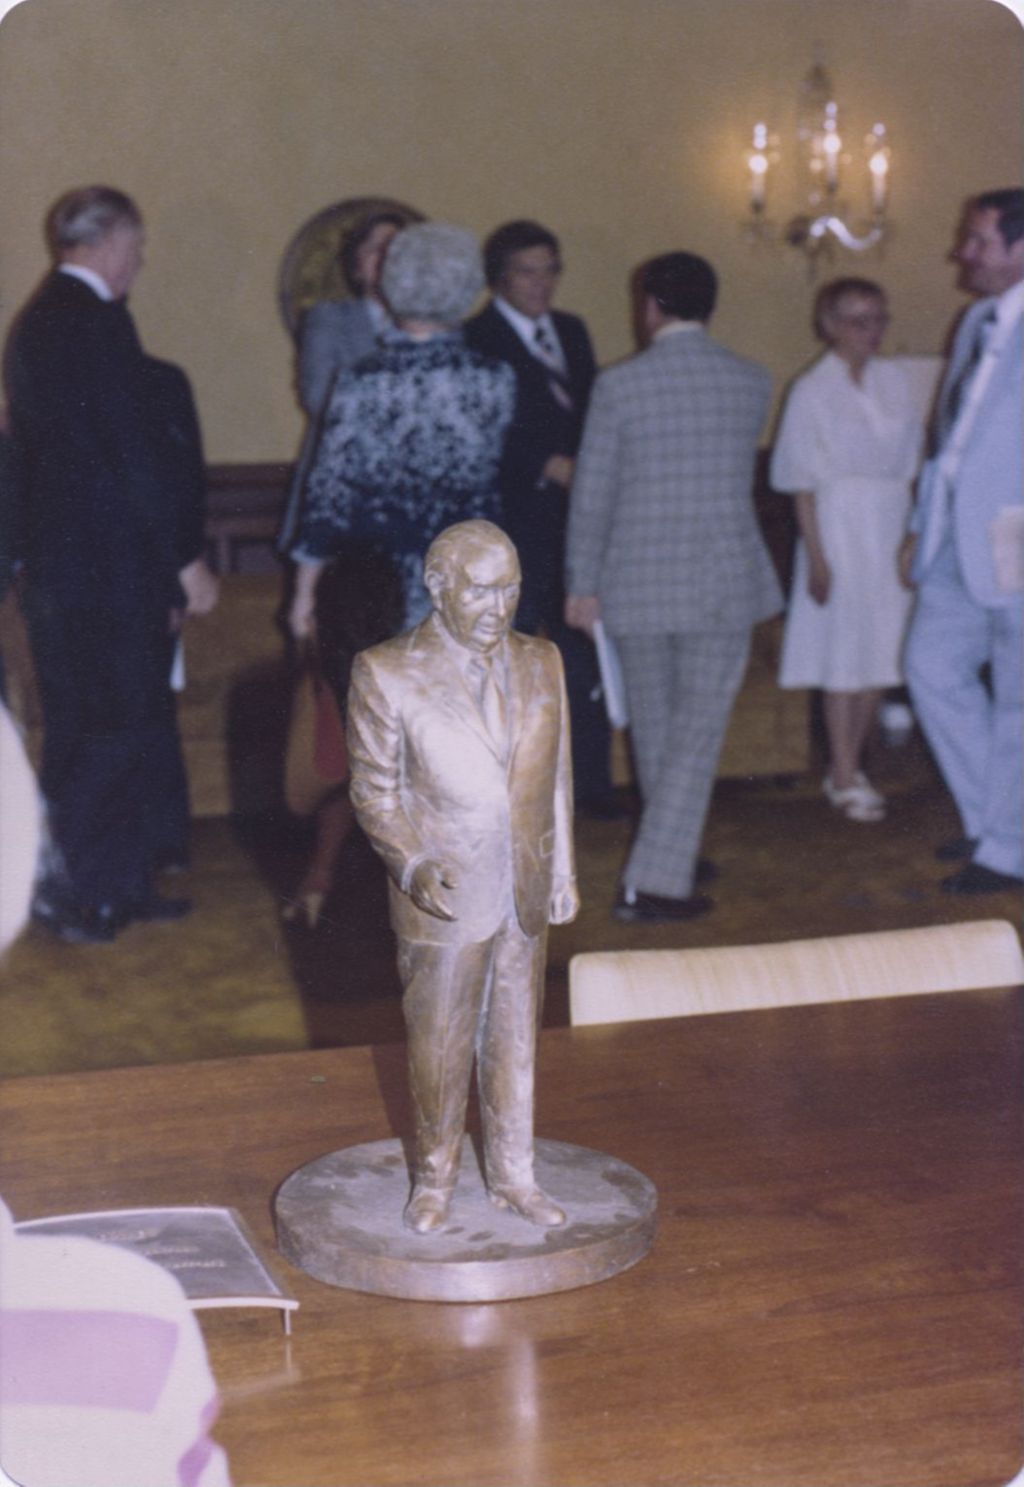 Miniature copy of the Richard J. Daley statue